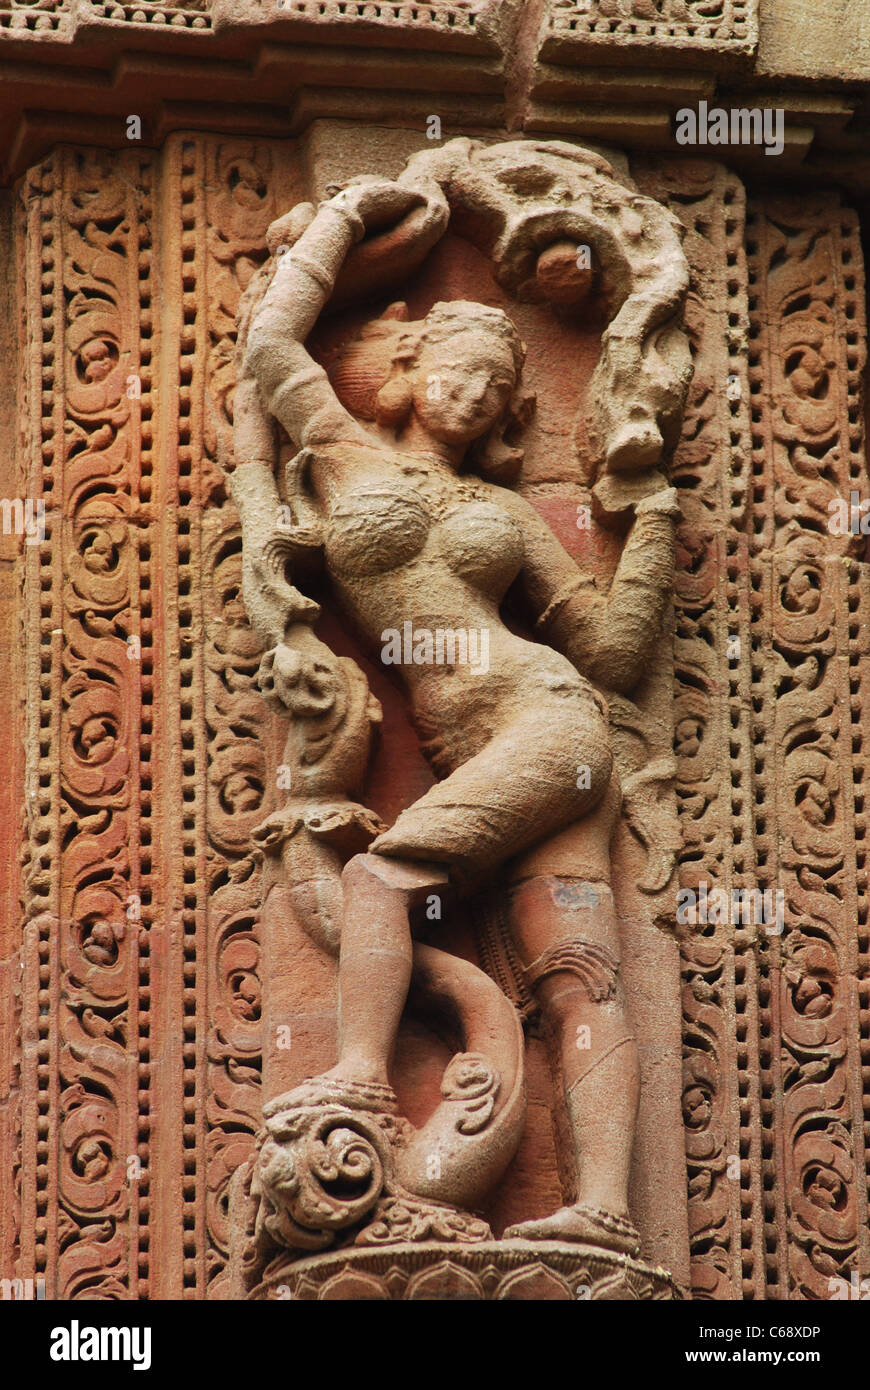 Close up of a sculpture on Raja Rani Temple